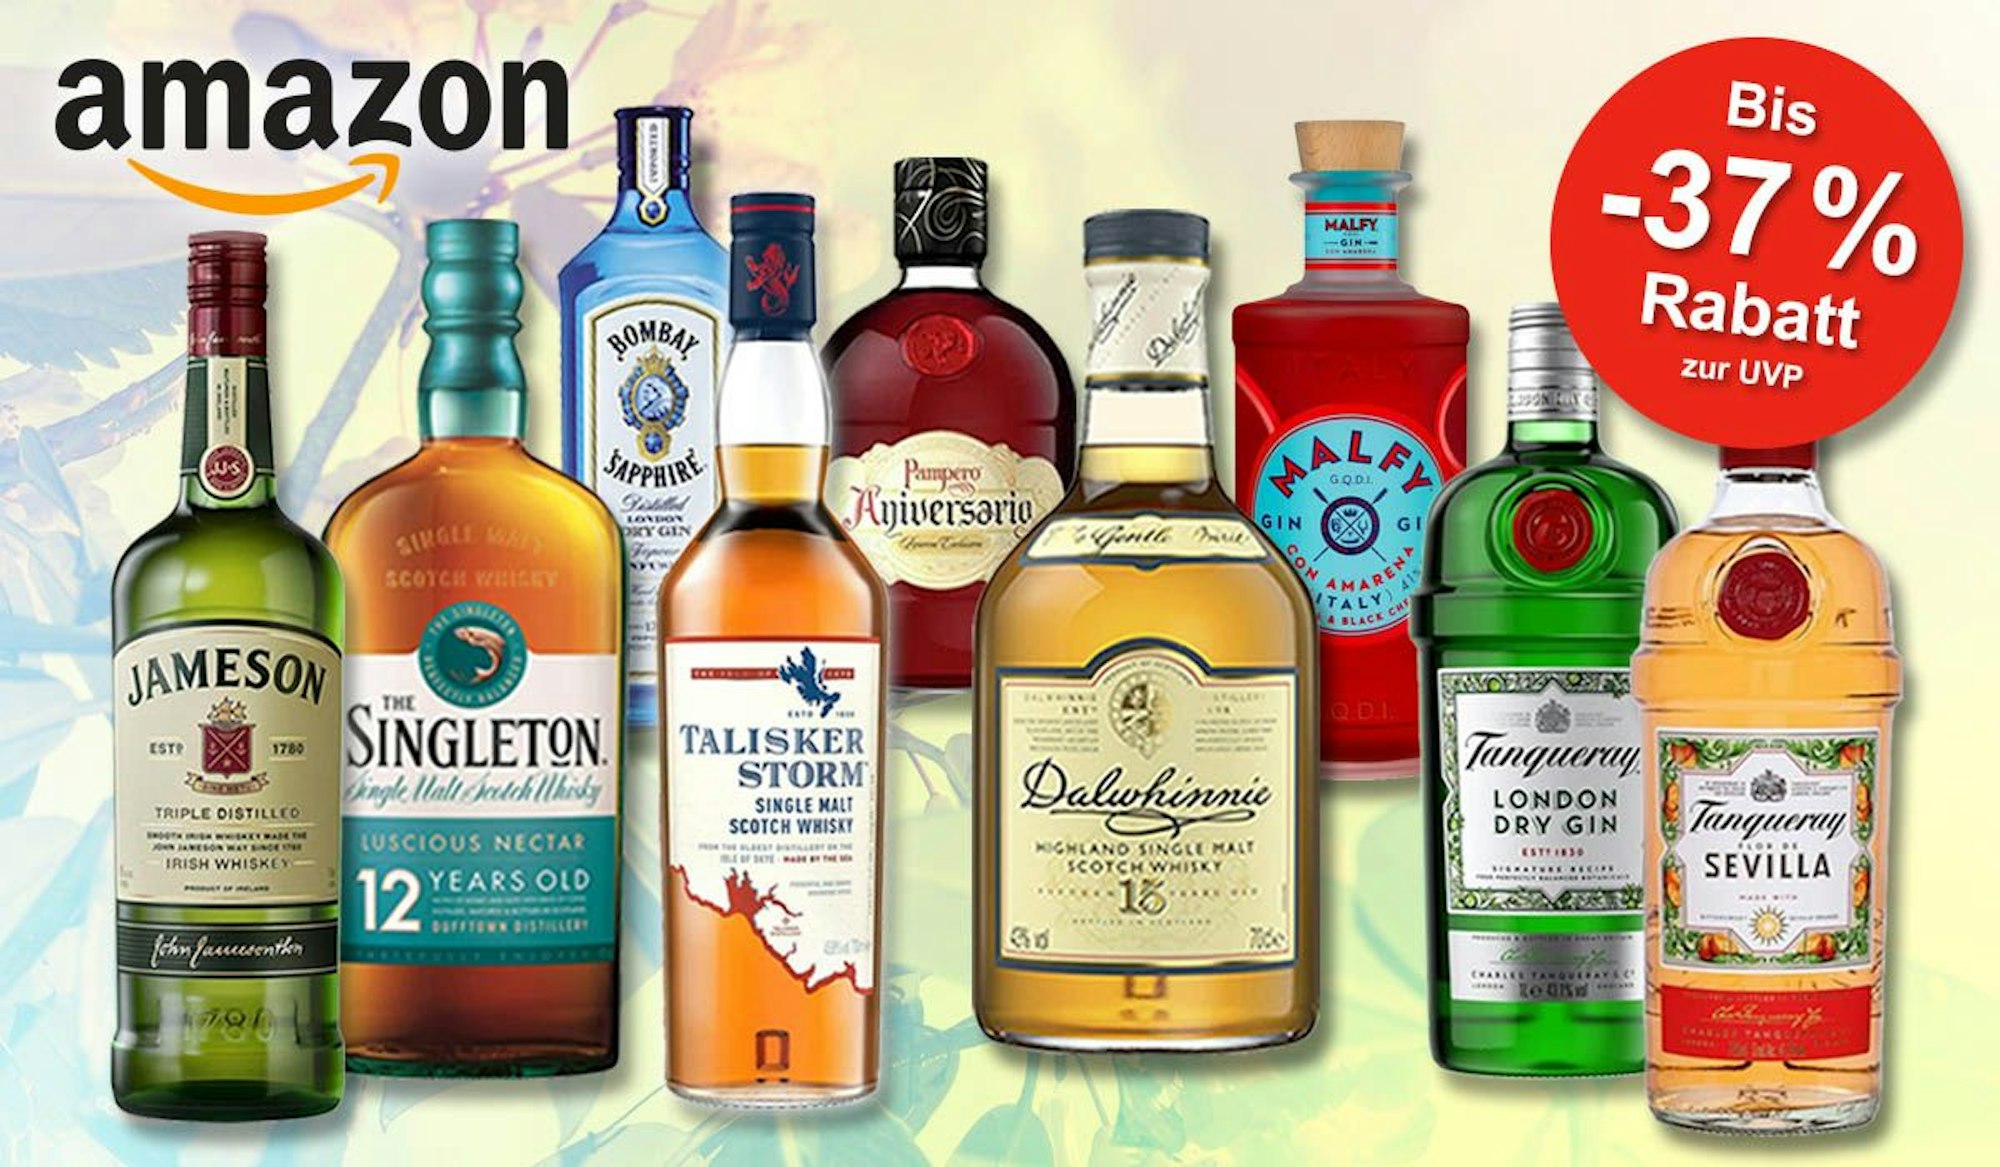 Premium Spirituosen in den Amazon Angeboten: Talisker, Jameson, Dalwhinnie, The Singleton Whisky, Tanqueray, Malfy , Bombay Gin, Pampero Rum.